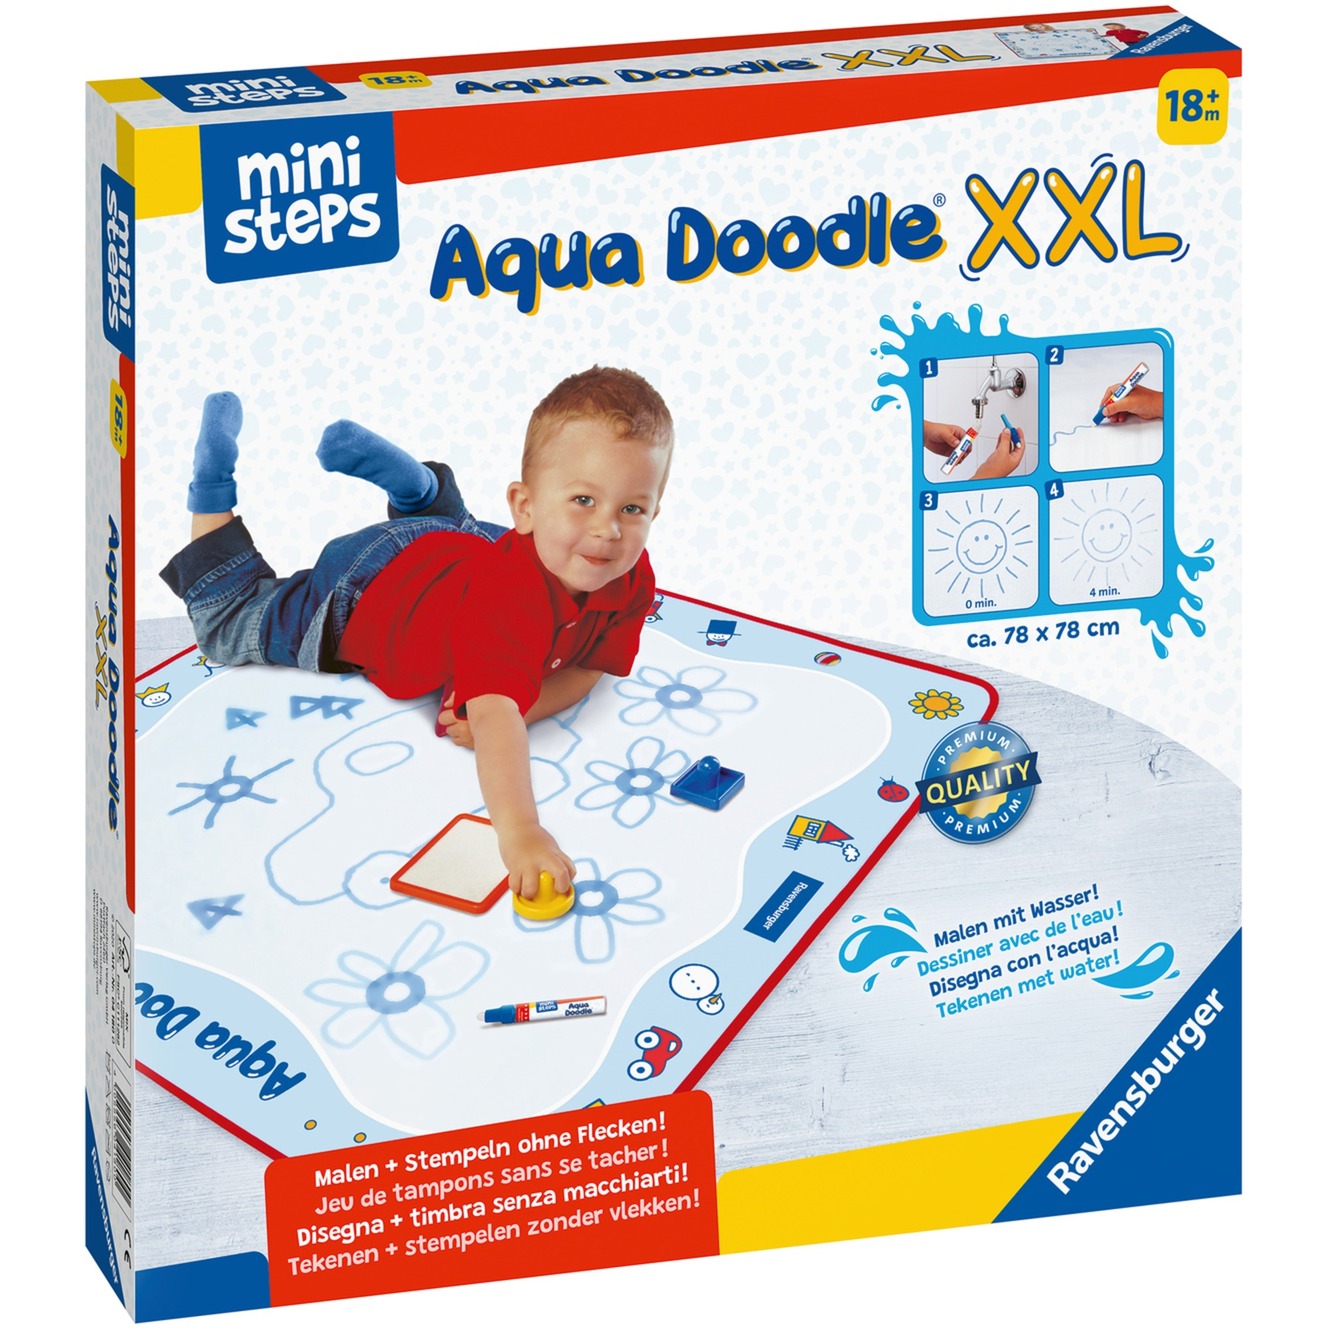 ministeps: Aqua Doodle XXL, Malen